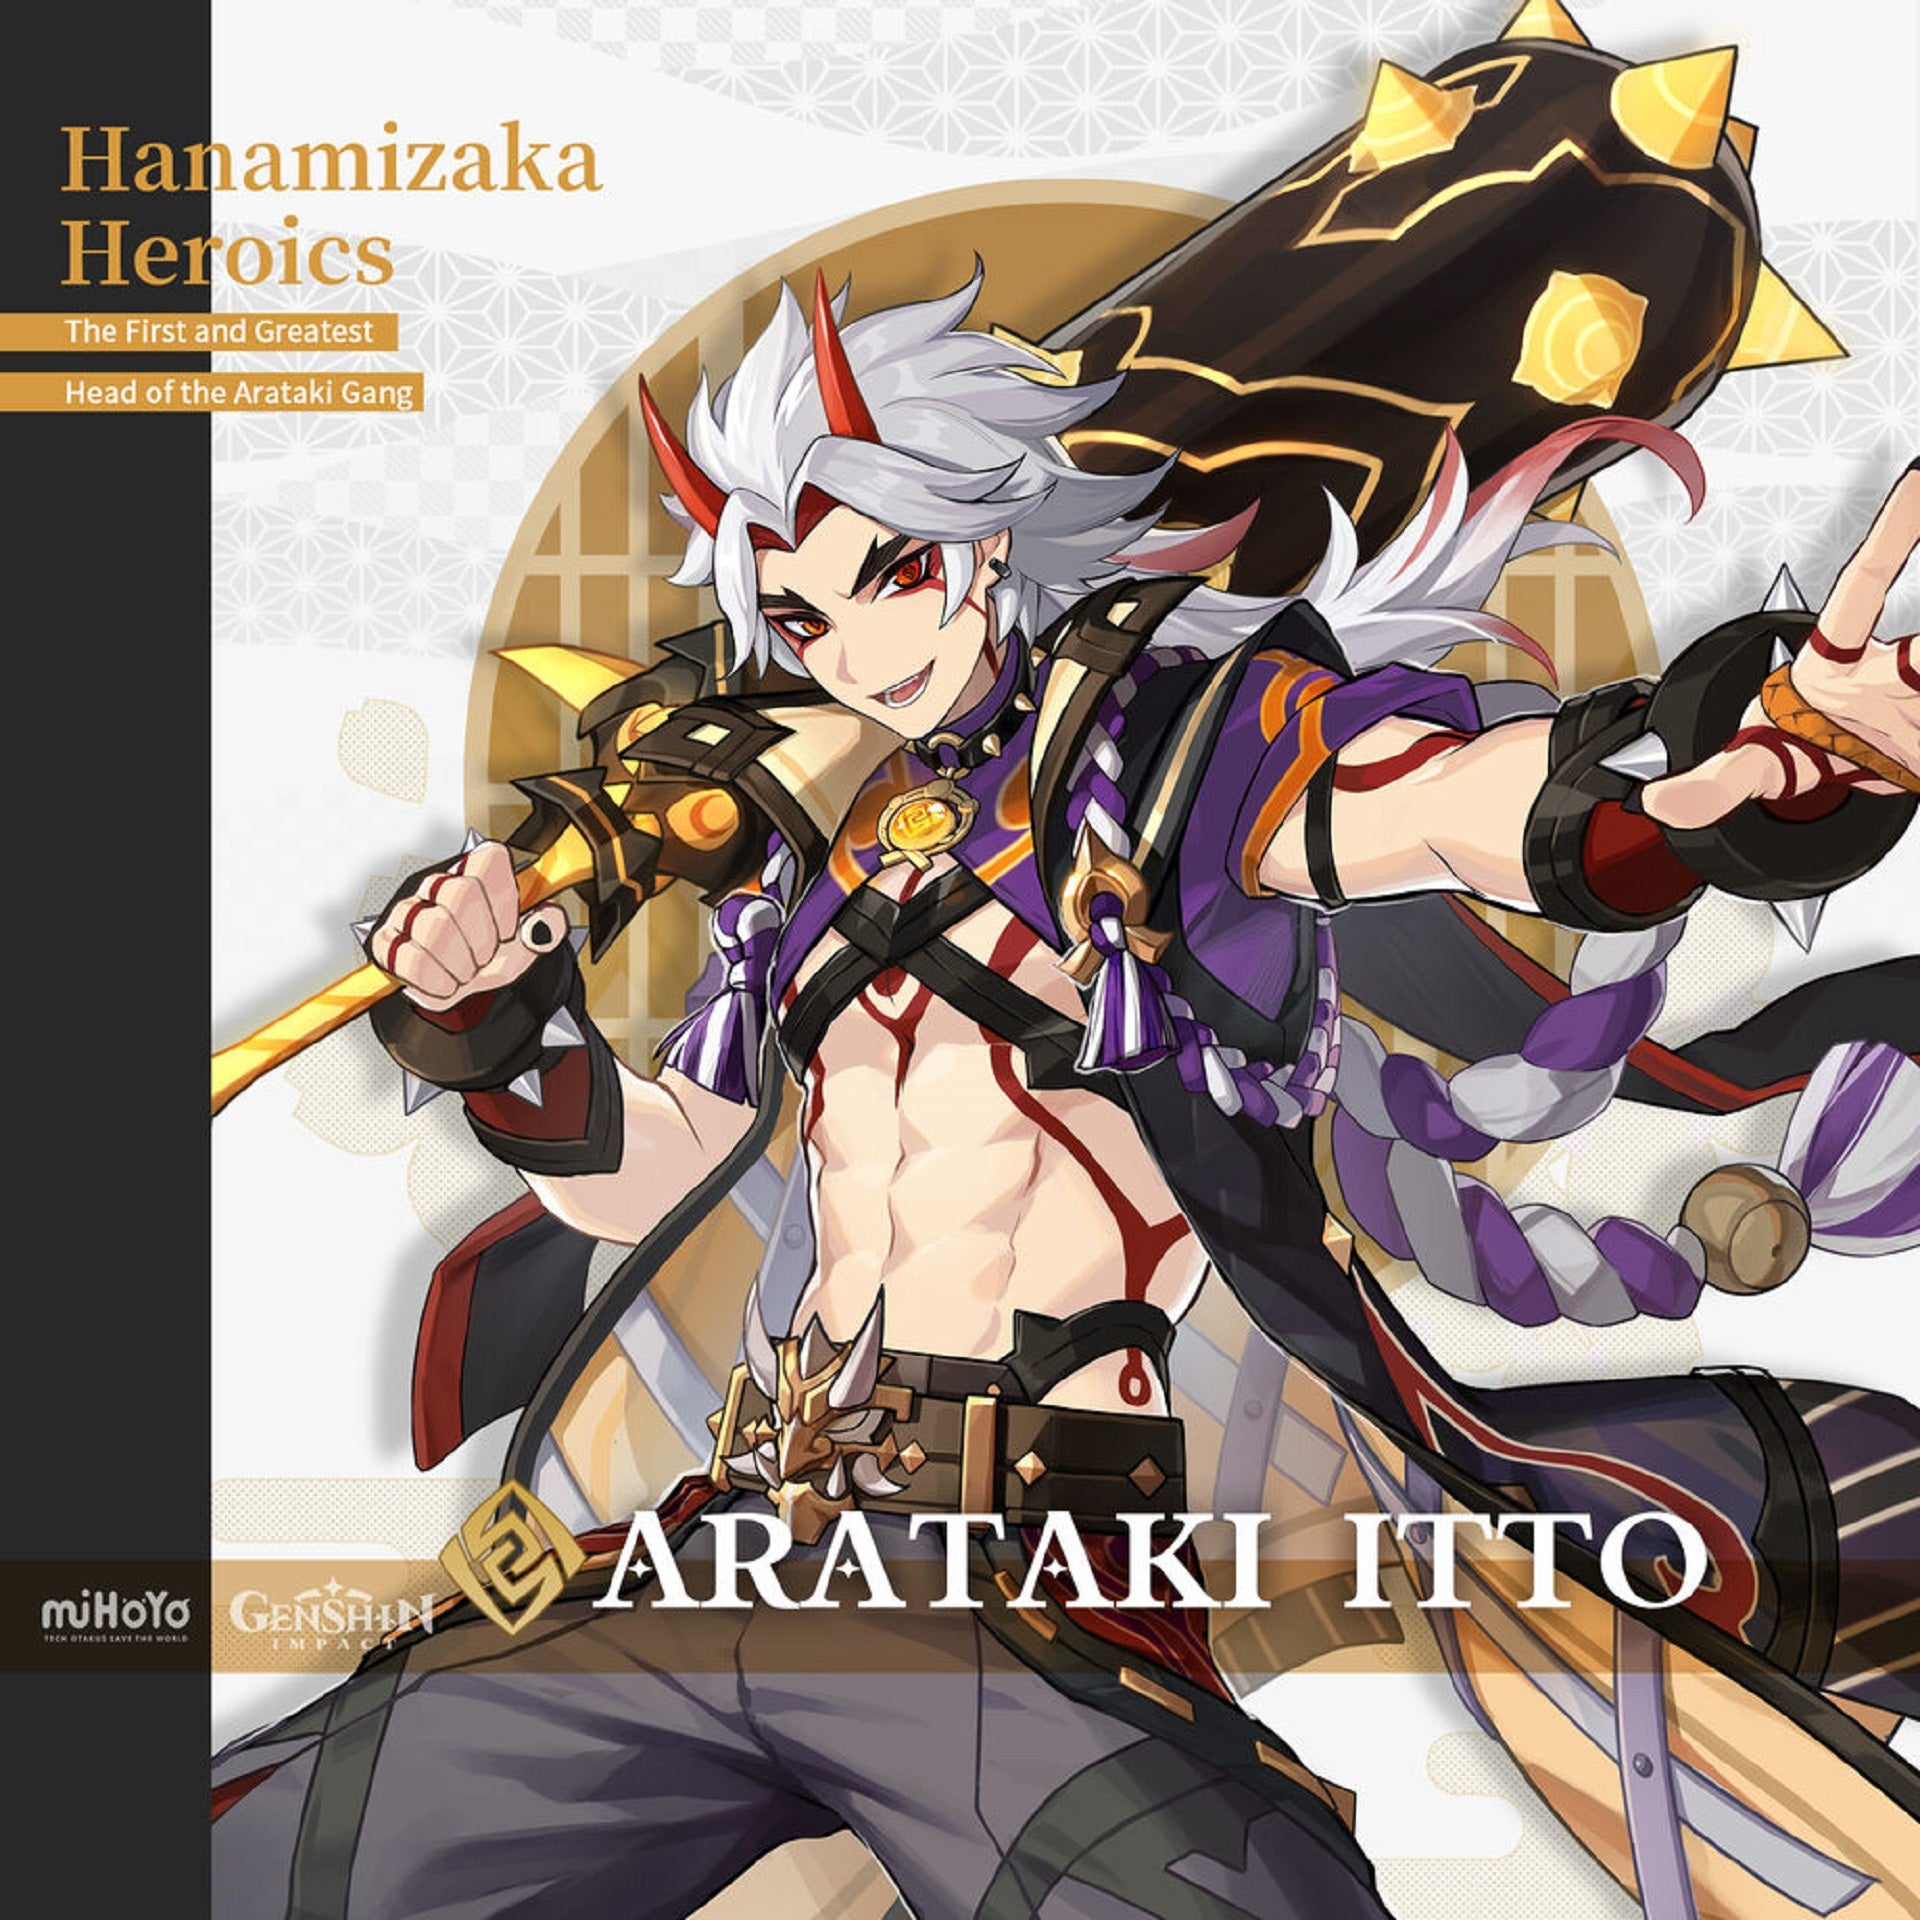 Arataki Itto's introduction panel in Genshin Impact. Text reads: "Hanamizaka Heroics: The First and Greatest Head of the Arataki Gang".